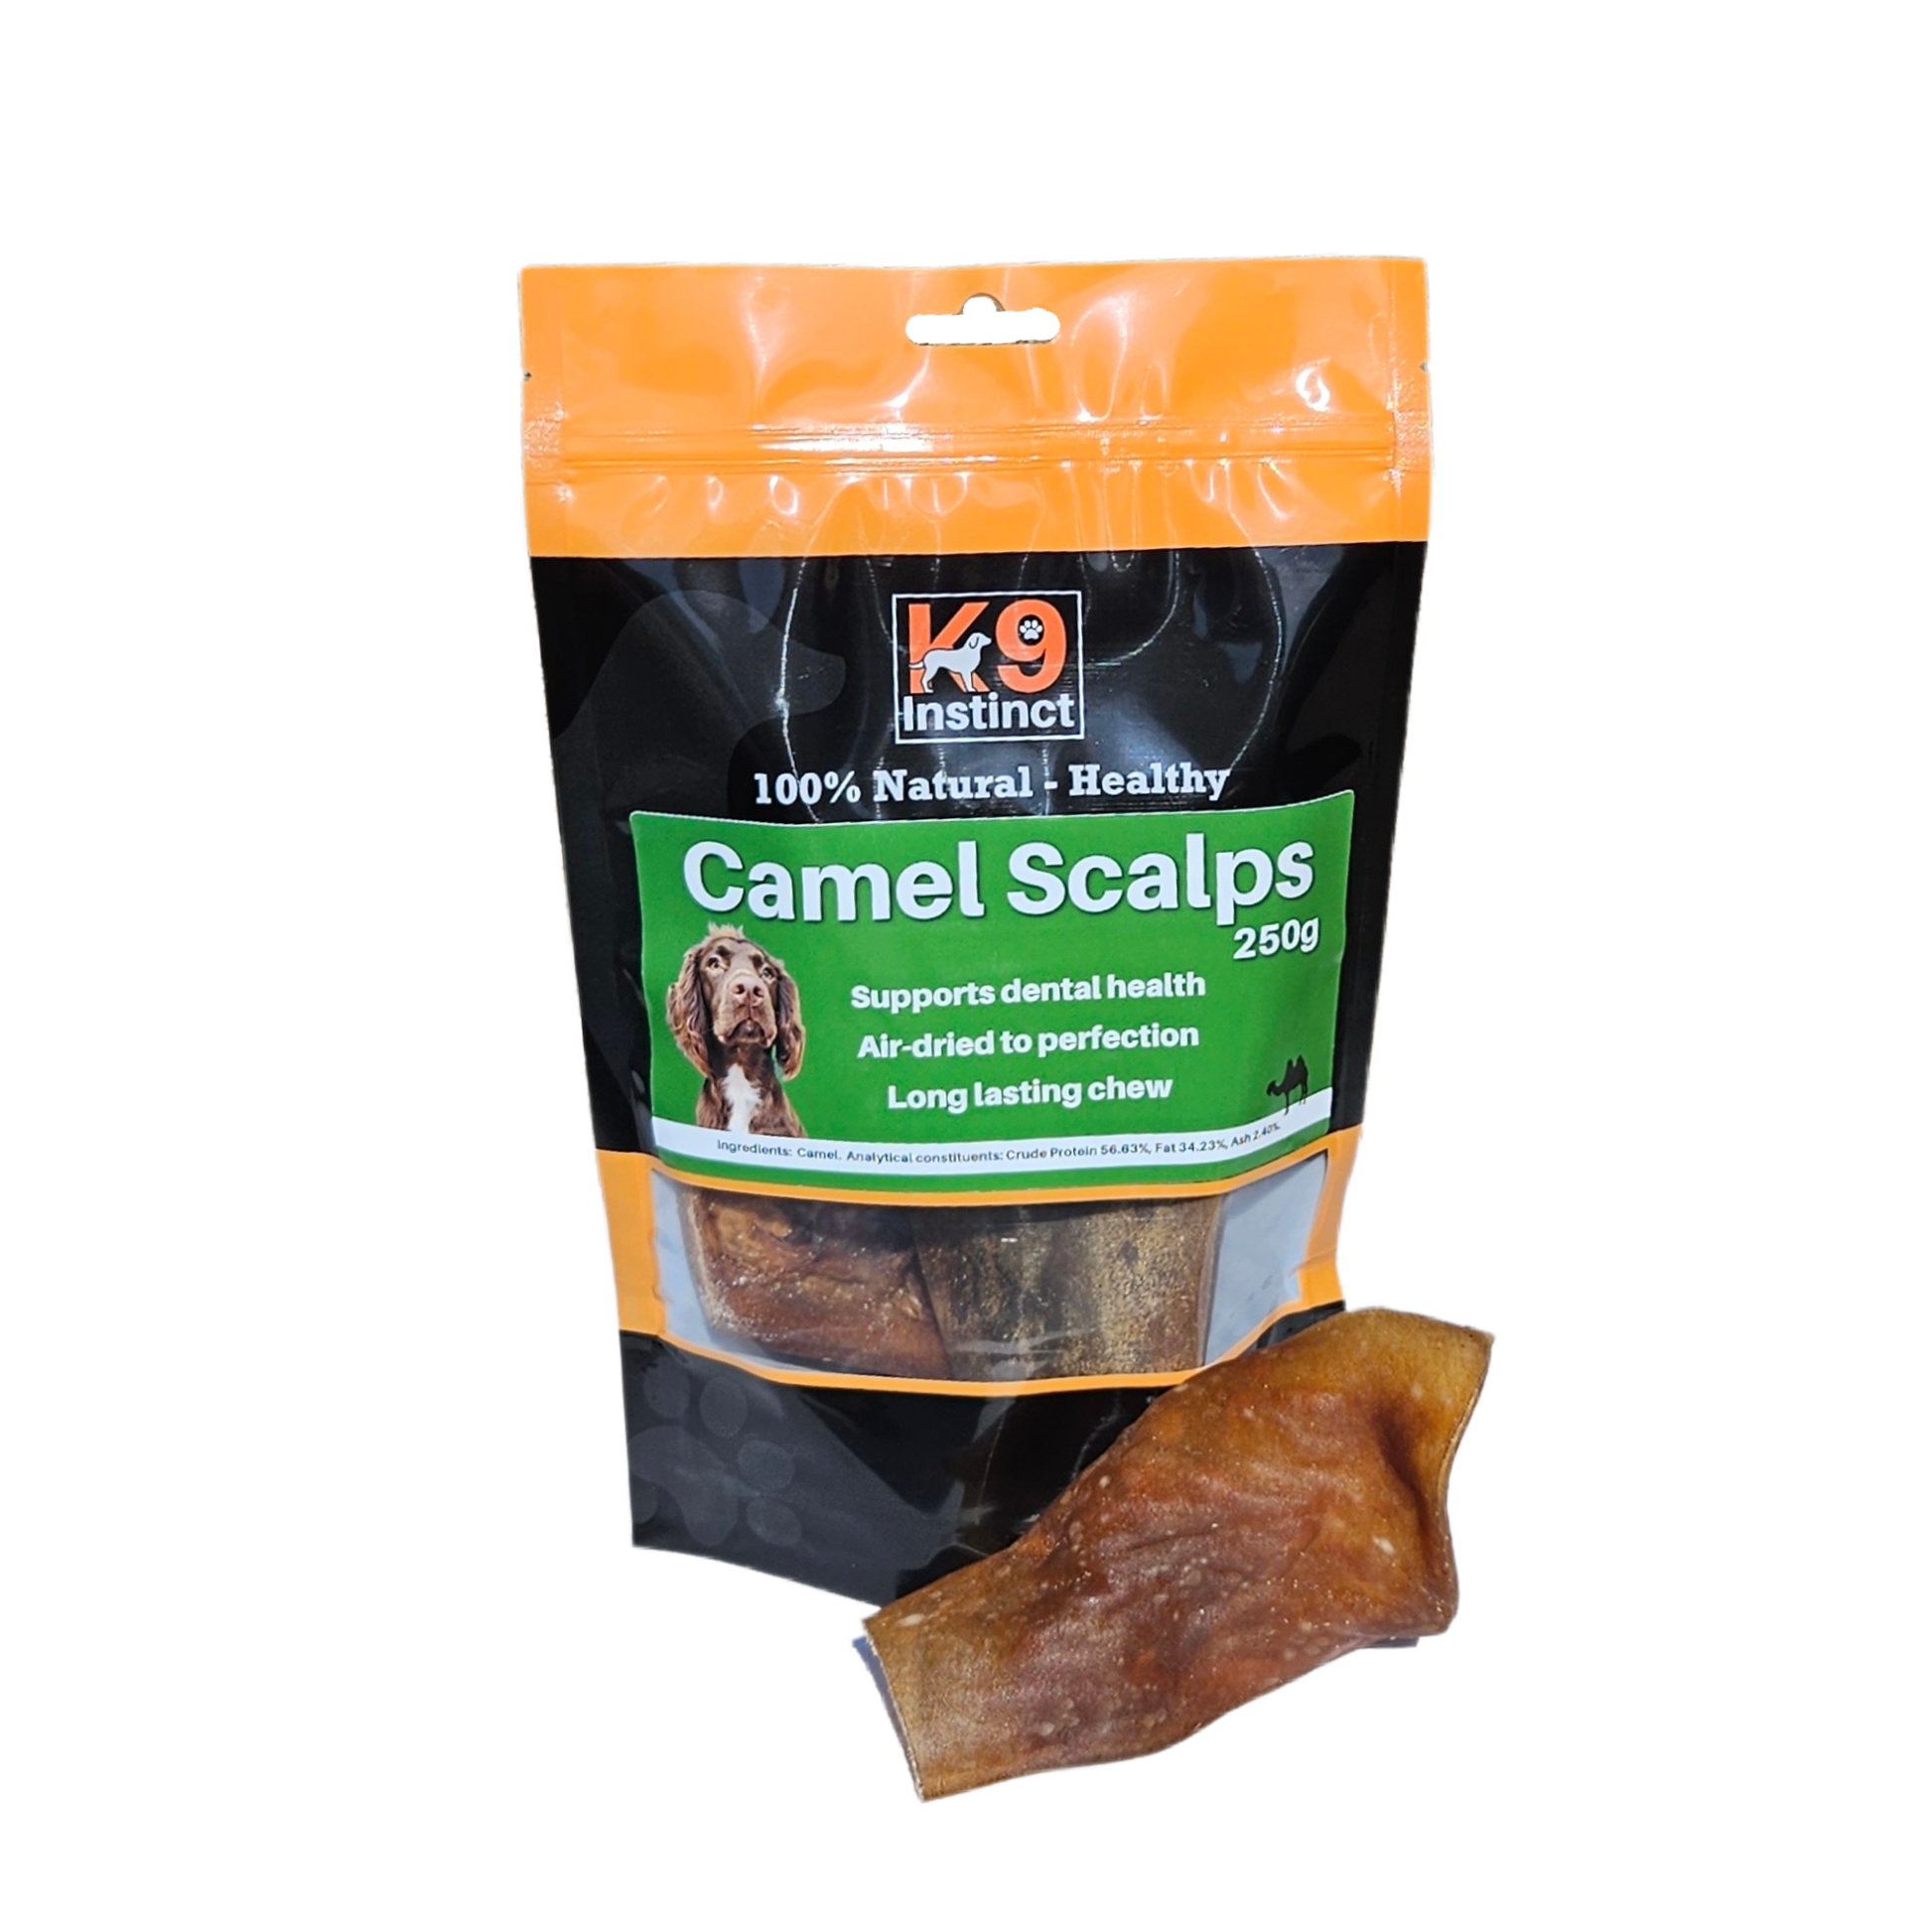 K9 Instinct UK Camel Scalps - natural dog chews